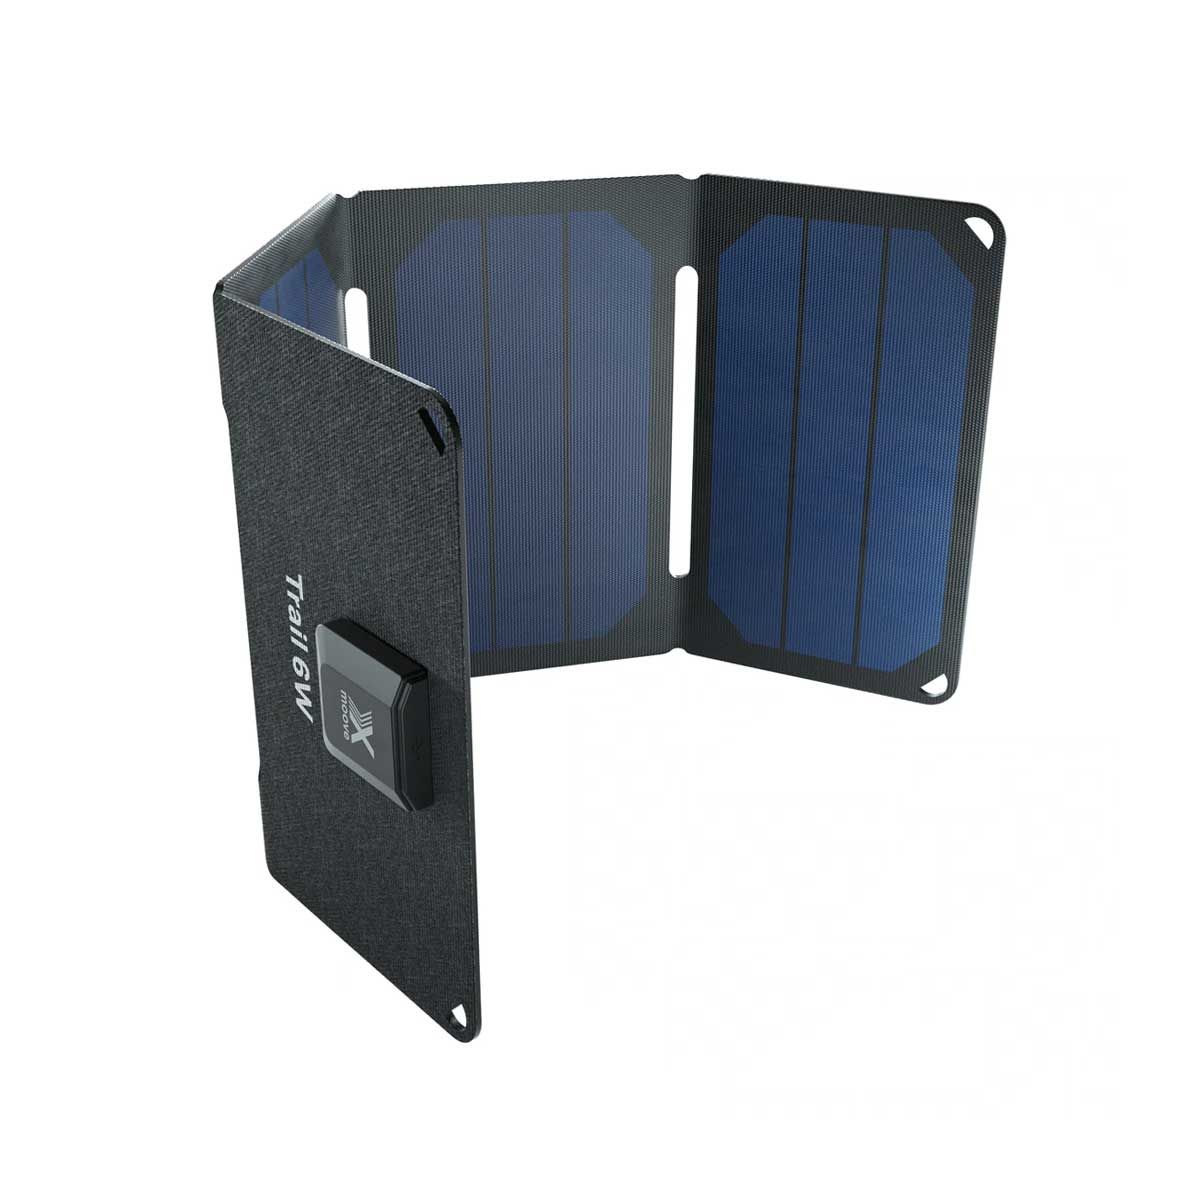 X-Moove Trail 6W portable solar panel